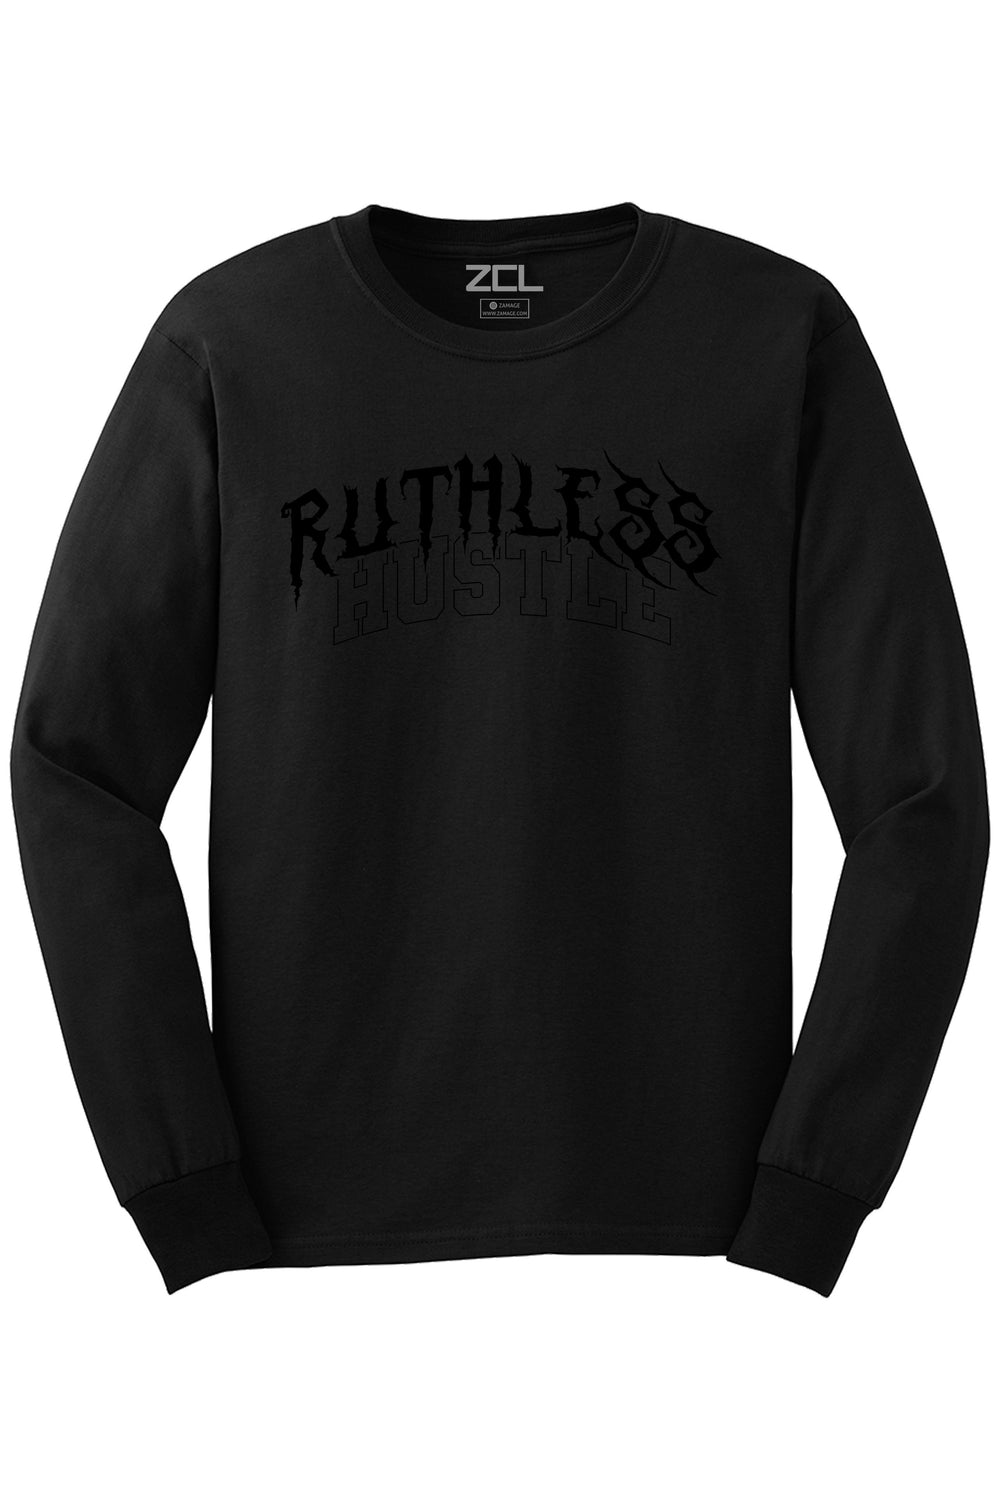 Ruthless Hustle Long Sleeve Tee (Black Logo) - Zamage